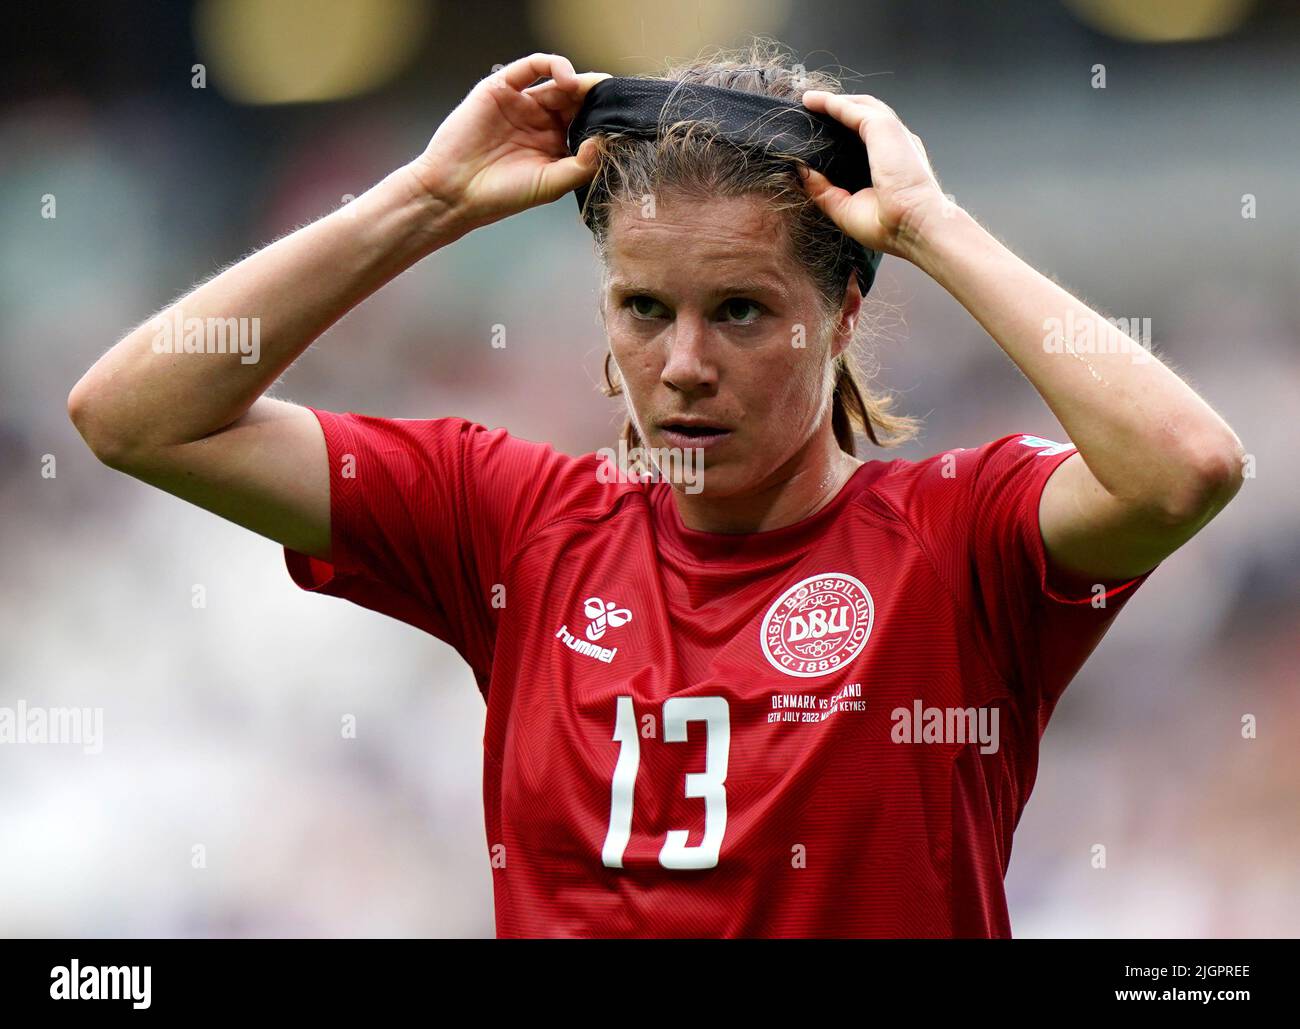 Sofie Junge Pedersen, in Danimarca, regola la sua fascia durante la partita UEFA Women's Euro 2022 Group B allo Stadio MK di Milton Keynes. Data foto: Martedì 12 luglio 2022. Foto Stock